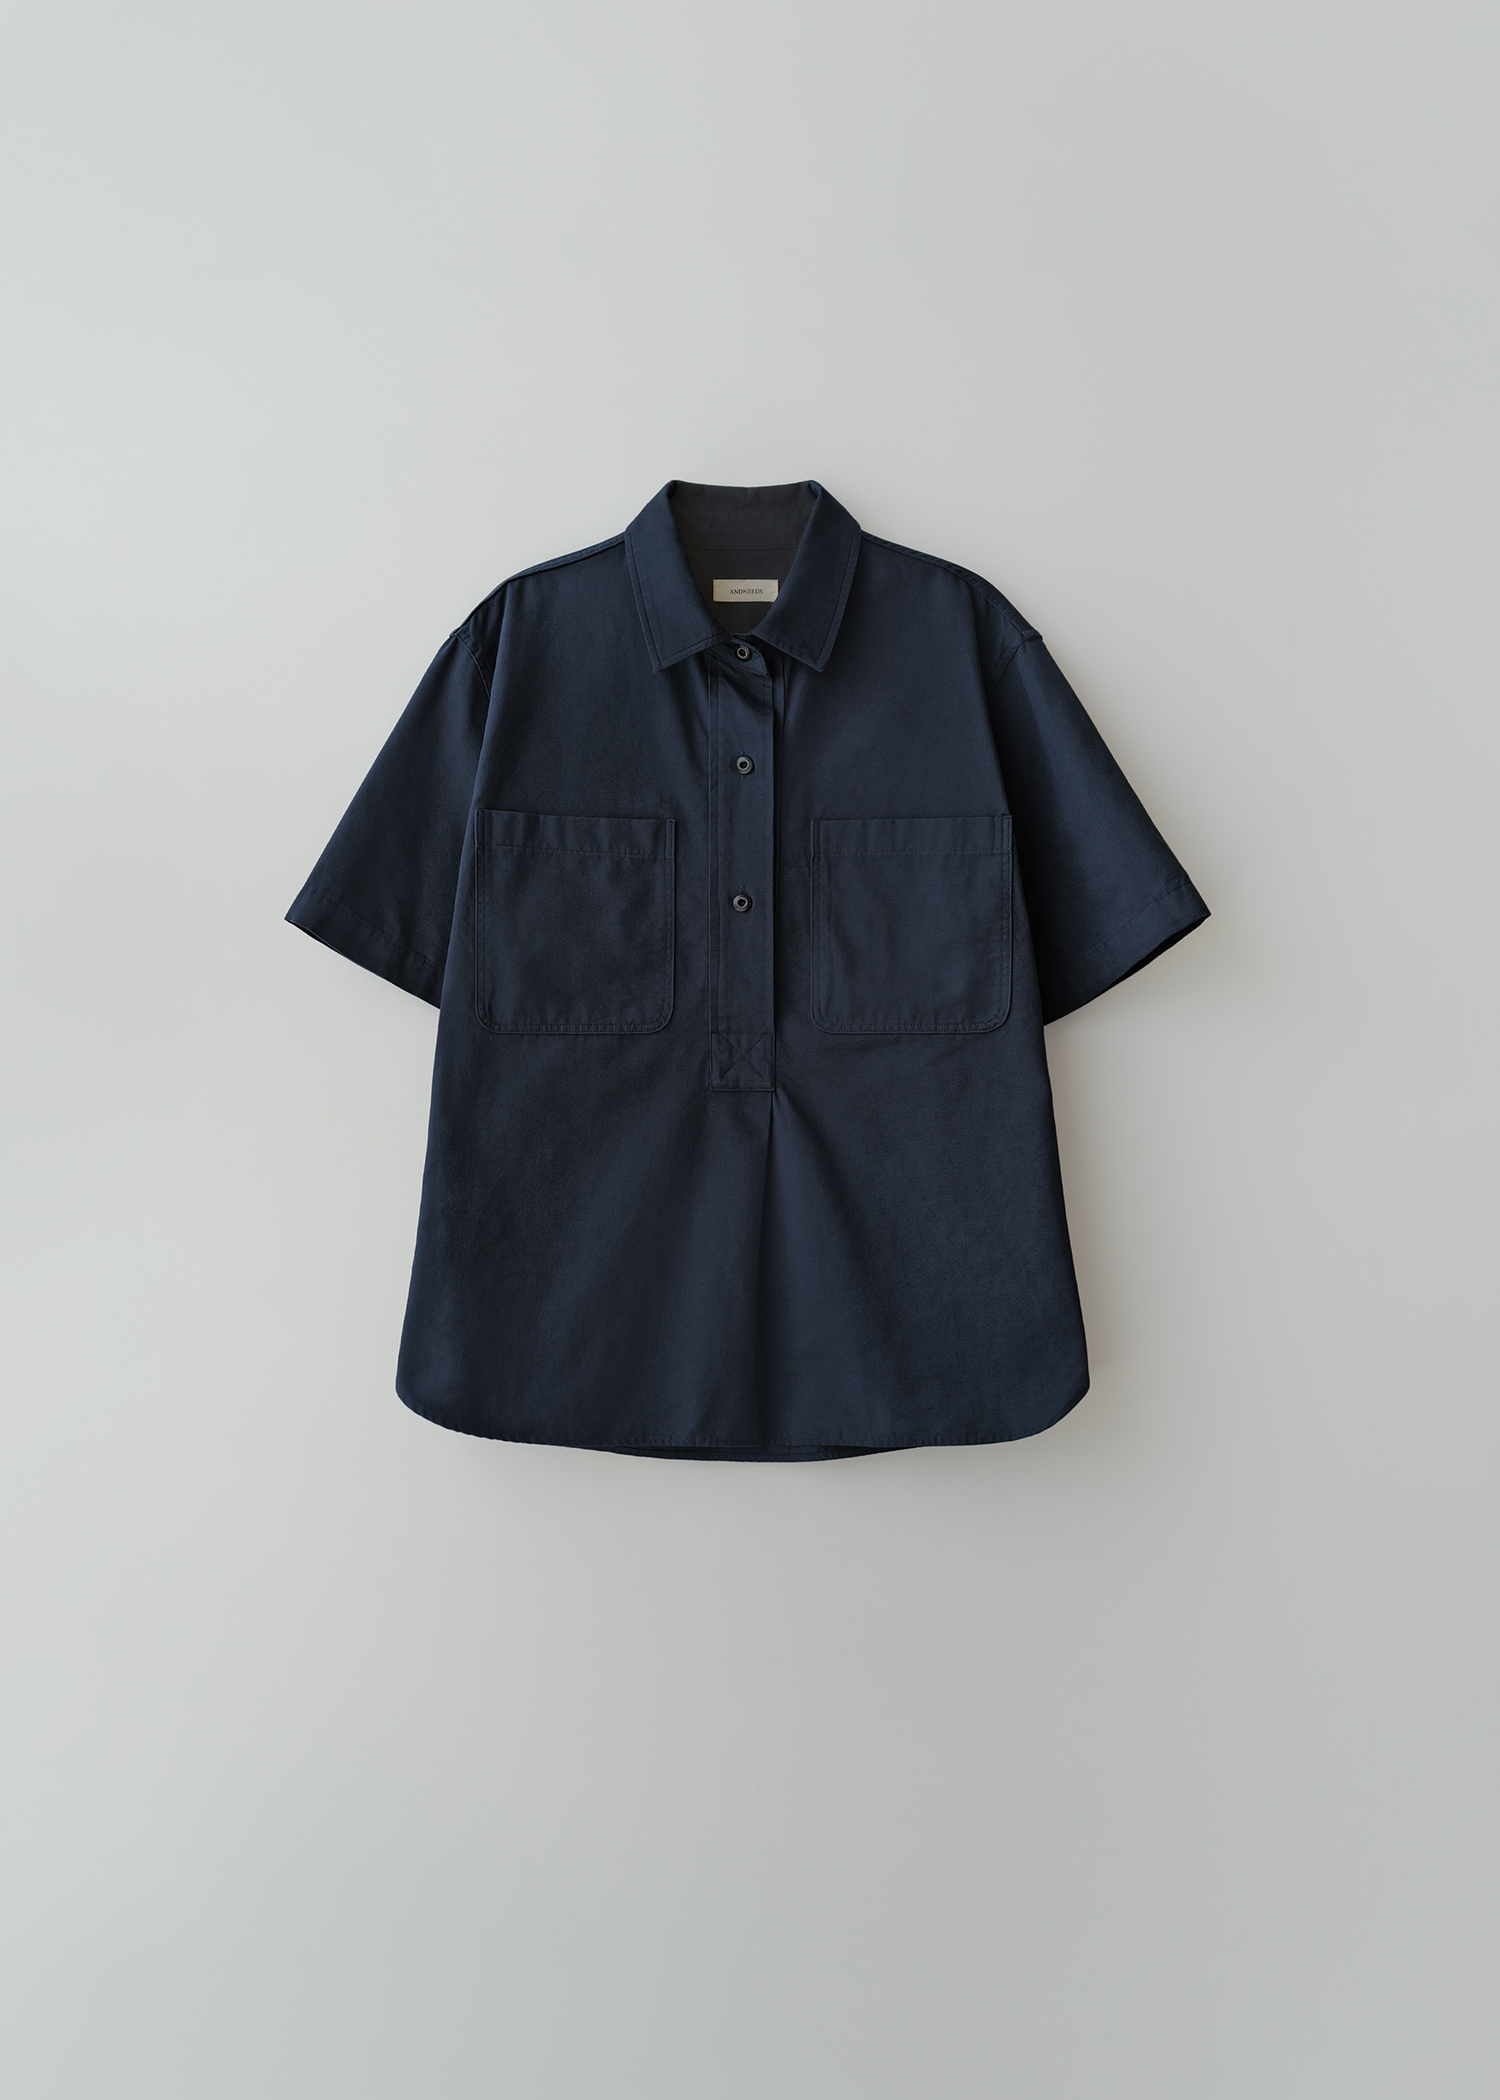 Two pocket half shirt (navy)